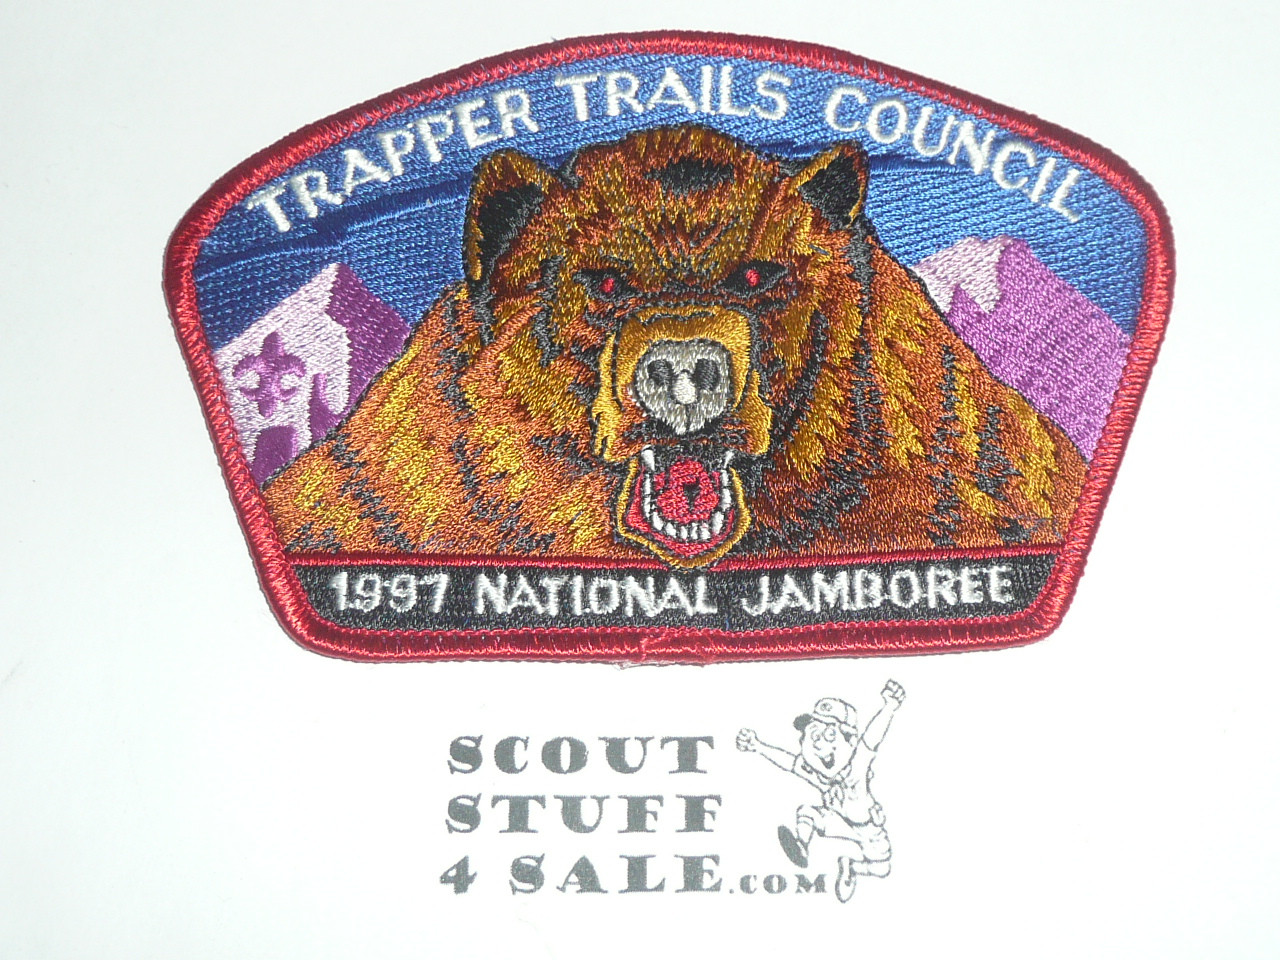 1997 National Jamboree JSP - Trapper Trails Council